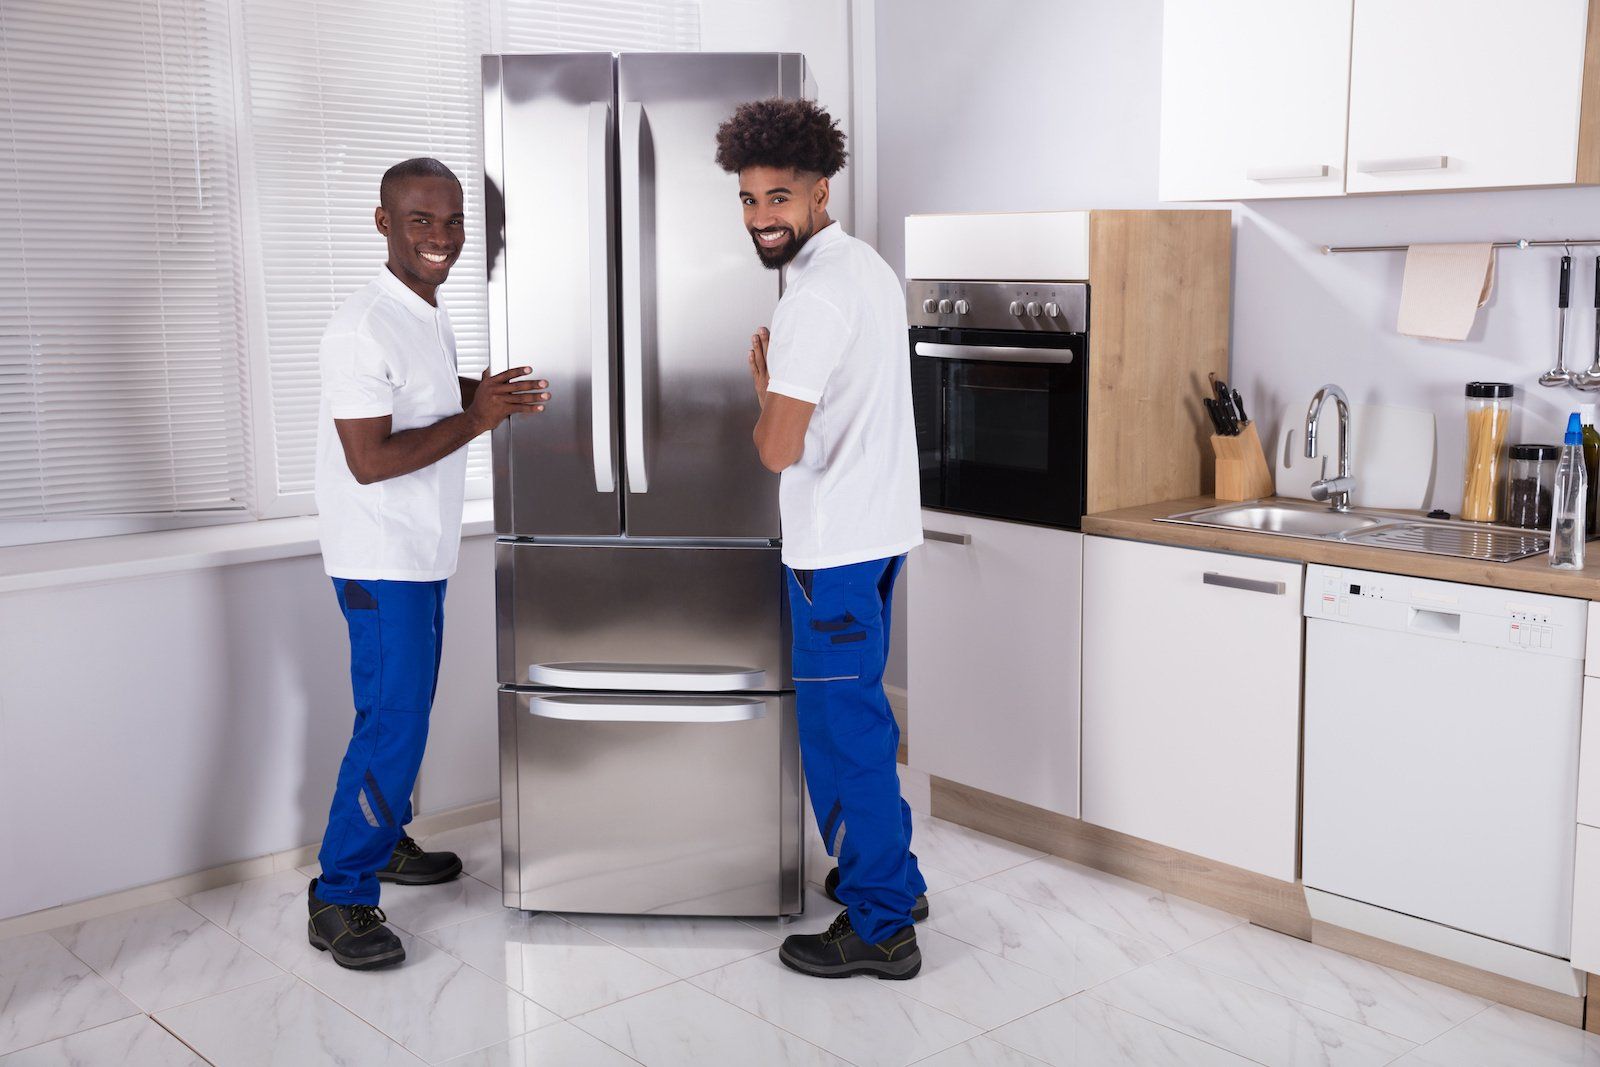 Two men in work attire diligently repairing the kitchen freezer.